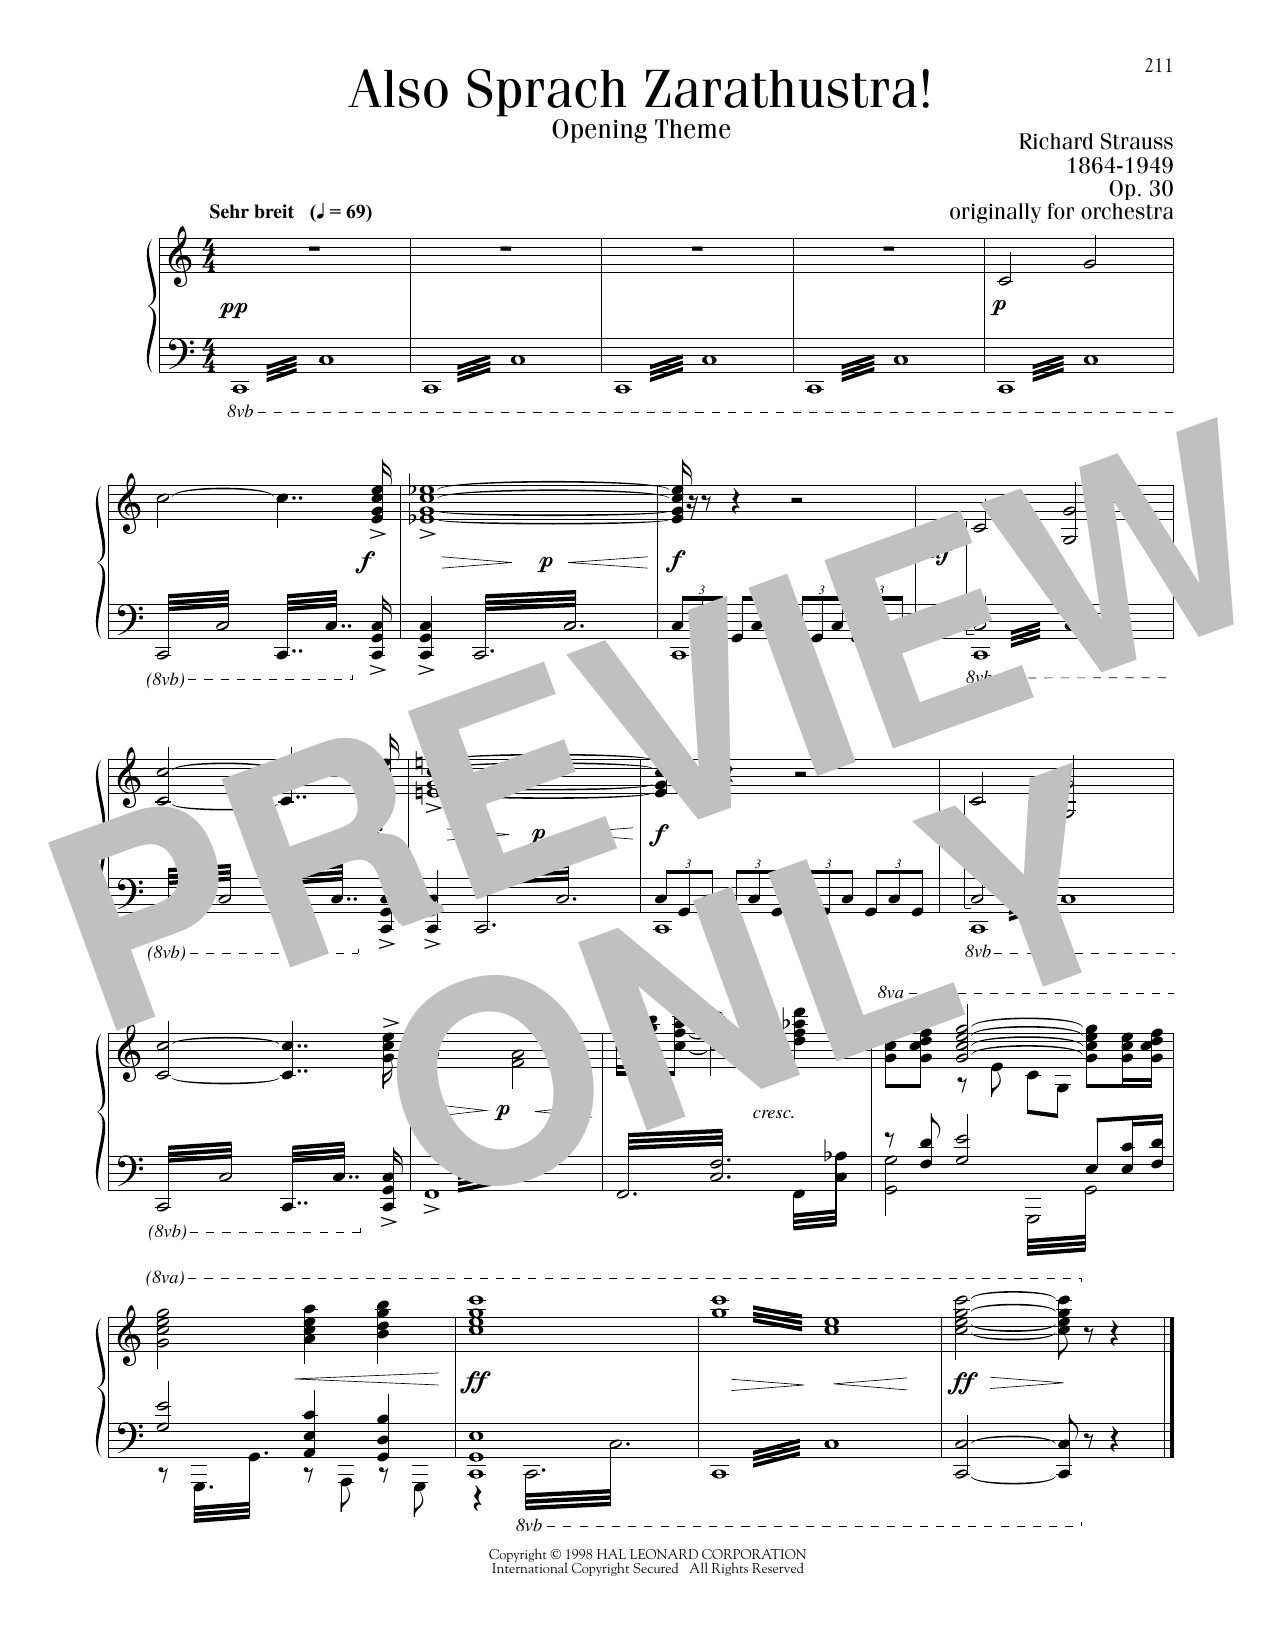 Richard Strauss Also Sprach Zarathustra, Opening Theme sheet music notes printable PDF score